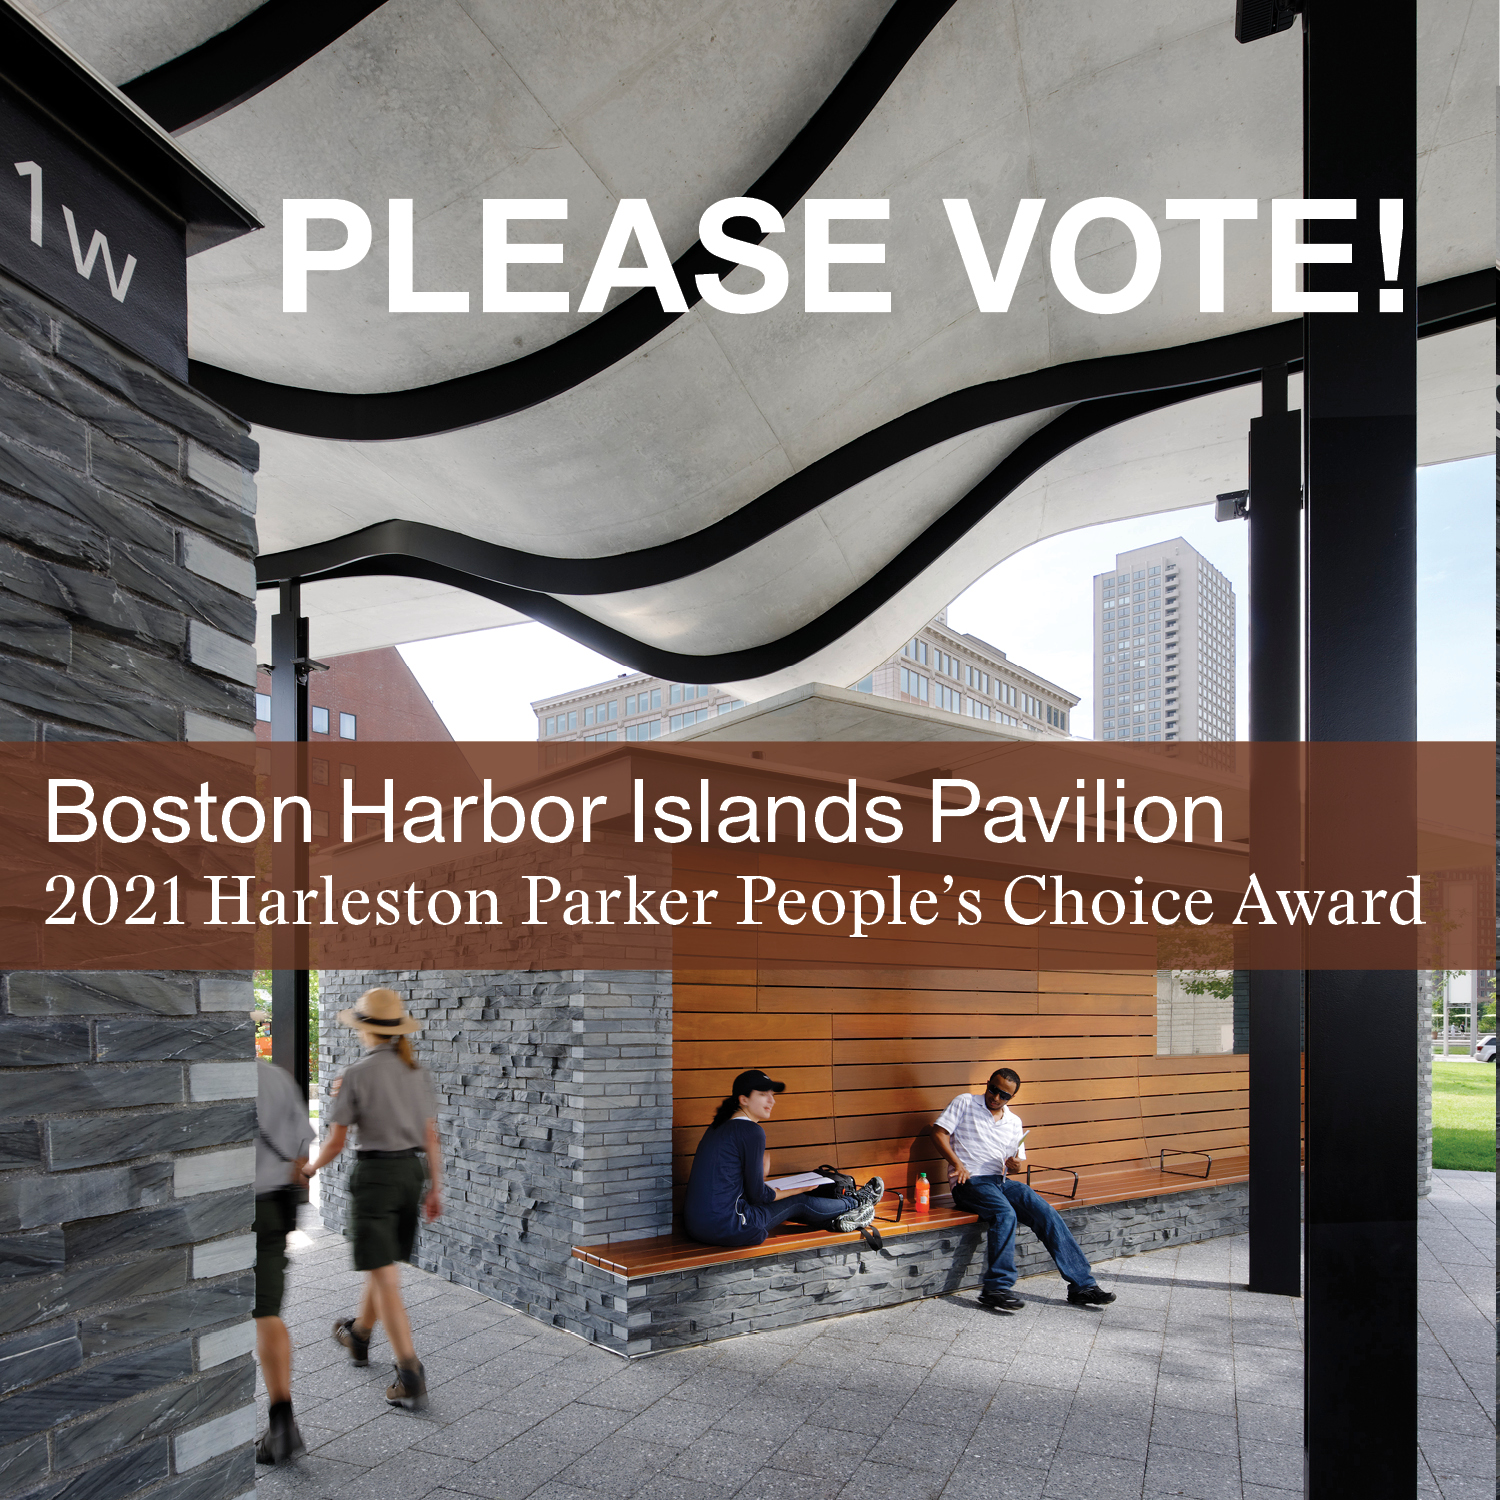 Please Vote! 2021 Harleston Parker People’s Choice Award – Boston Harbor Islands Pavilion